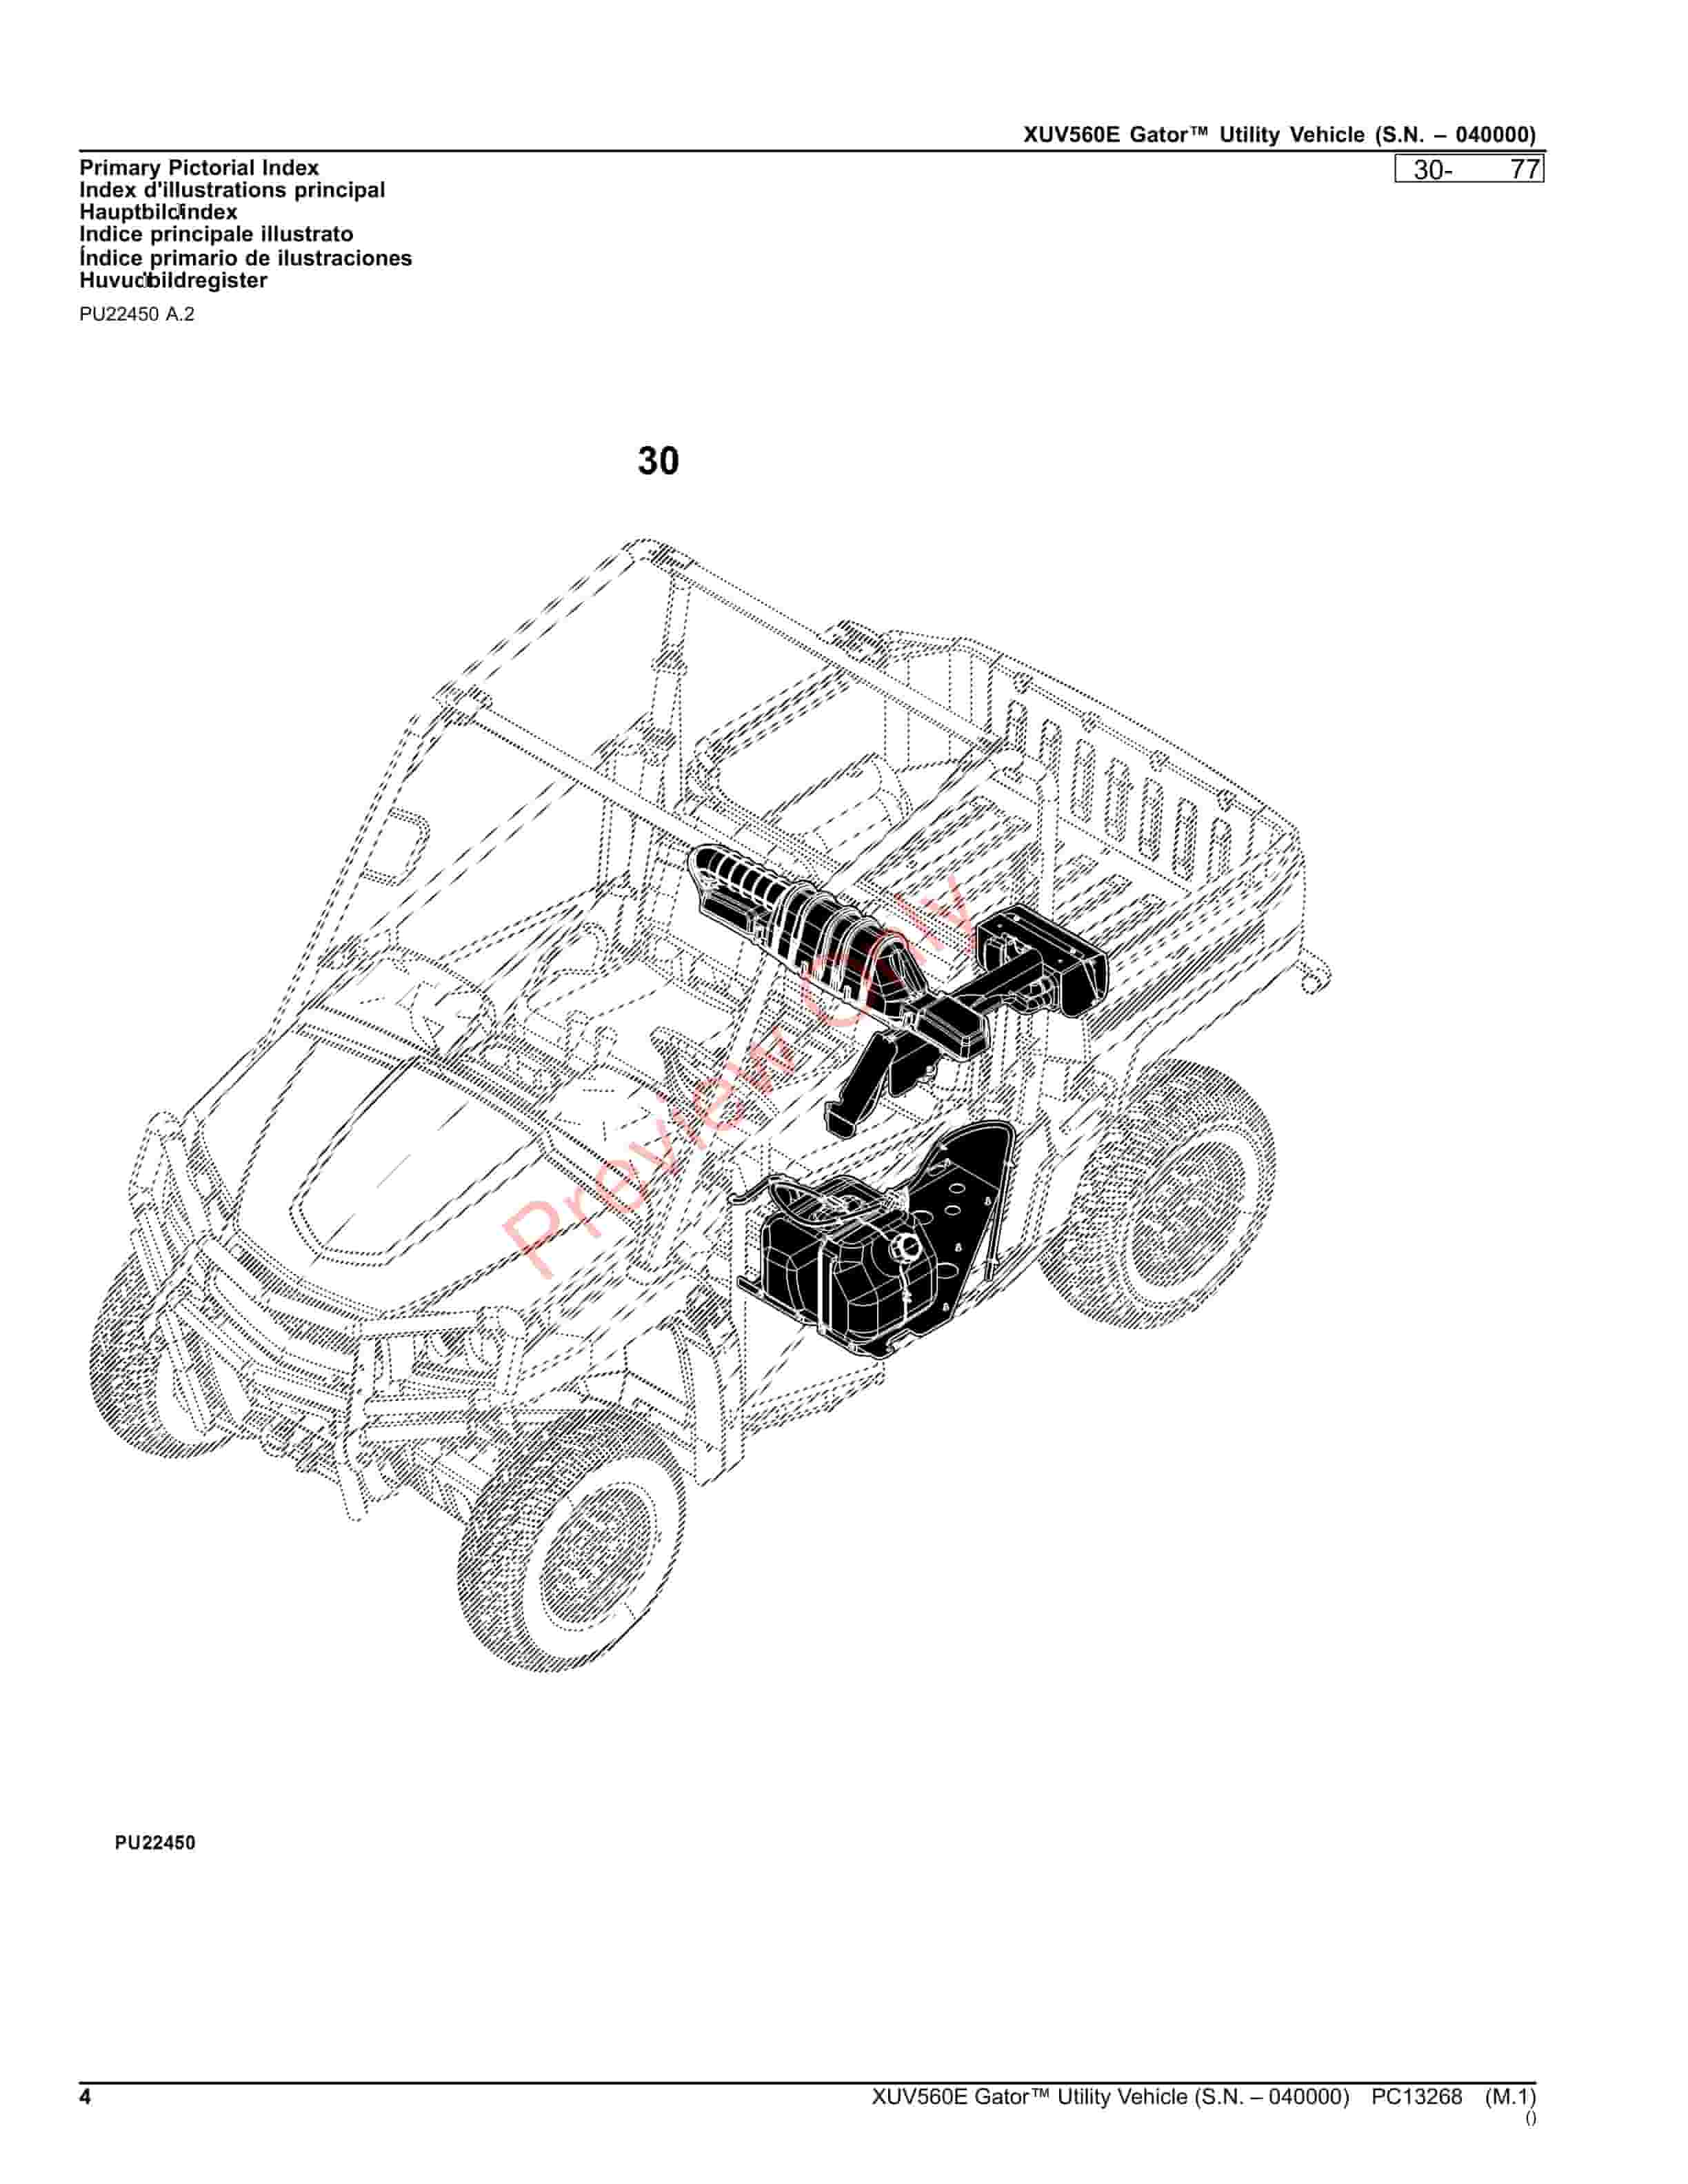 John Deere XUV560E Gator Utility Vehicle (S.N. 040000) Parts Catalog PC13268 23NOV23-4